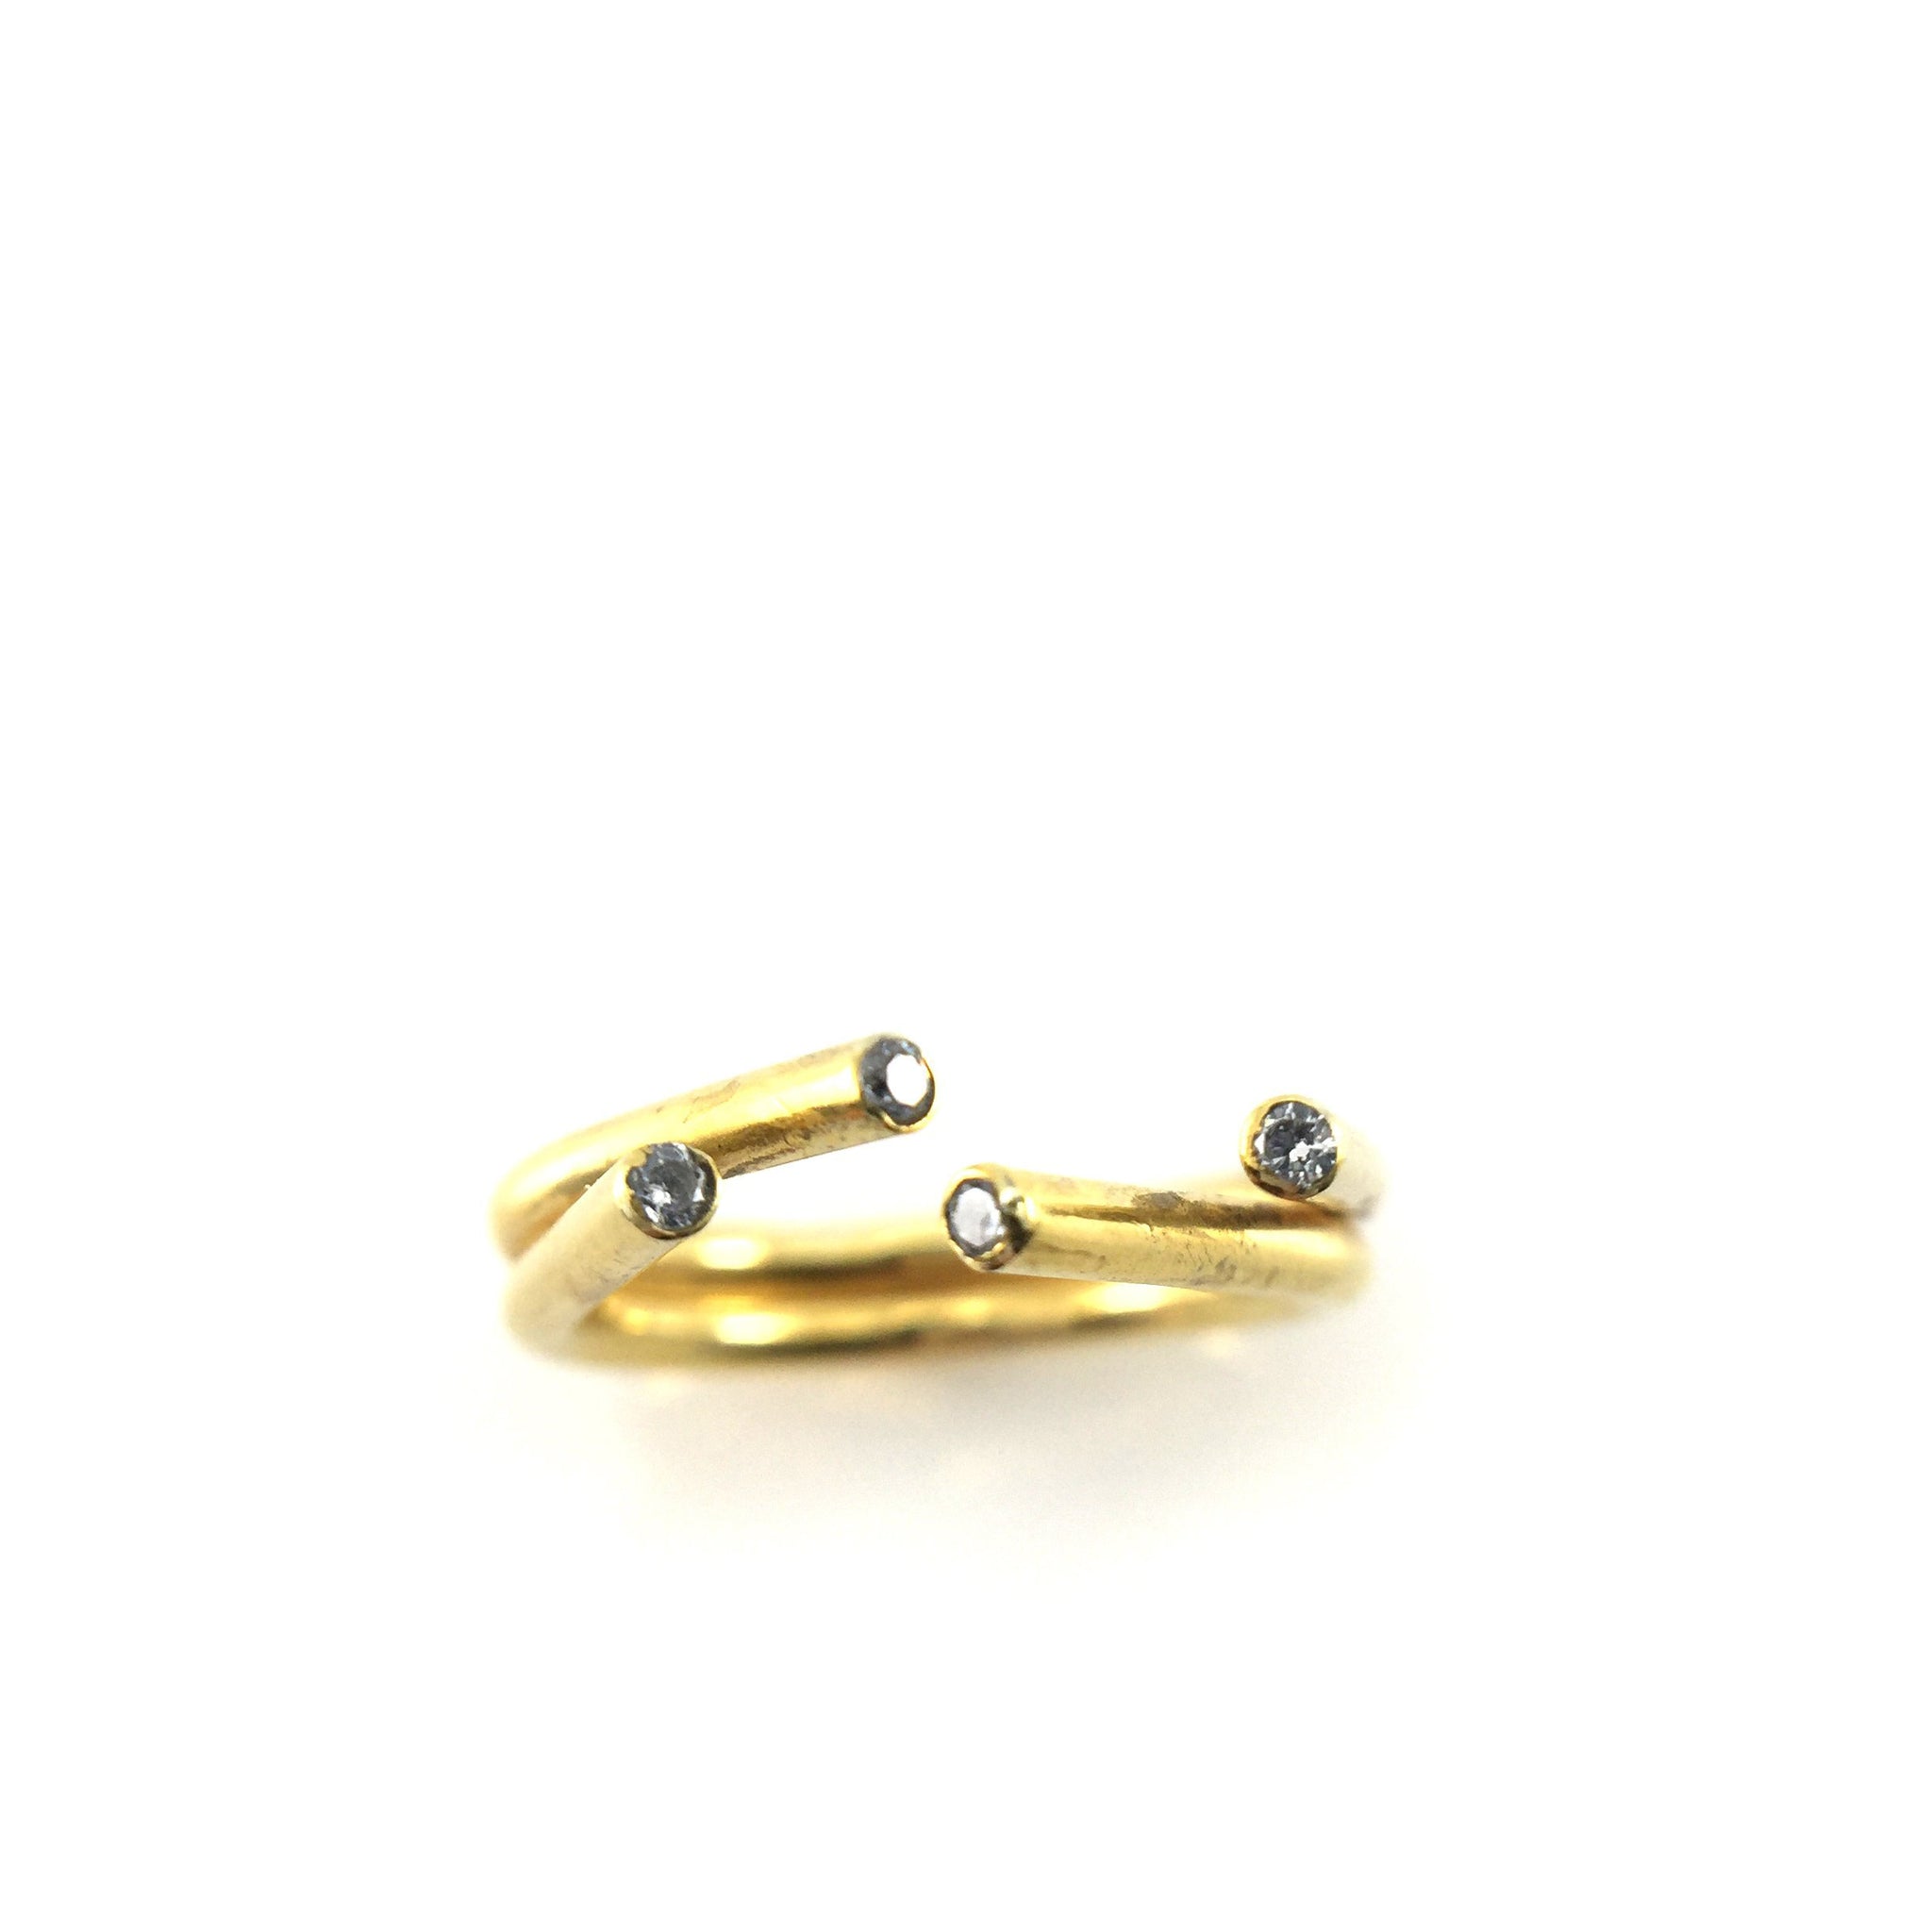 Buy Original Five Metal Daily Use Ring Design Plain 1 Gram Gold Ring Online